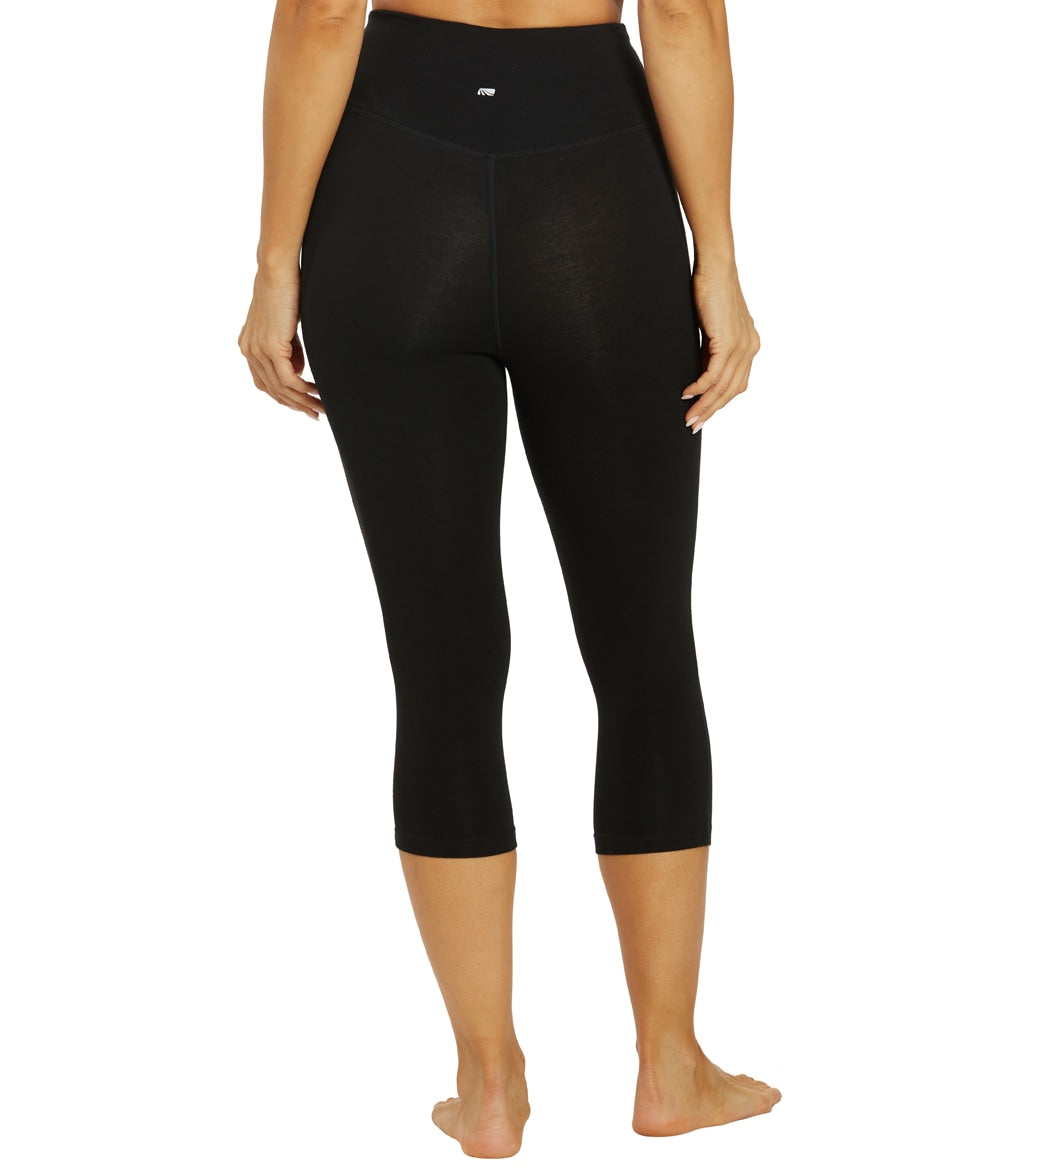 Marika Sport Women's Solid Grey Carbon Leggings Size Medium 8-10 Retail for  sale online | eBay